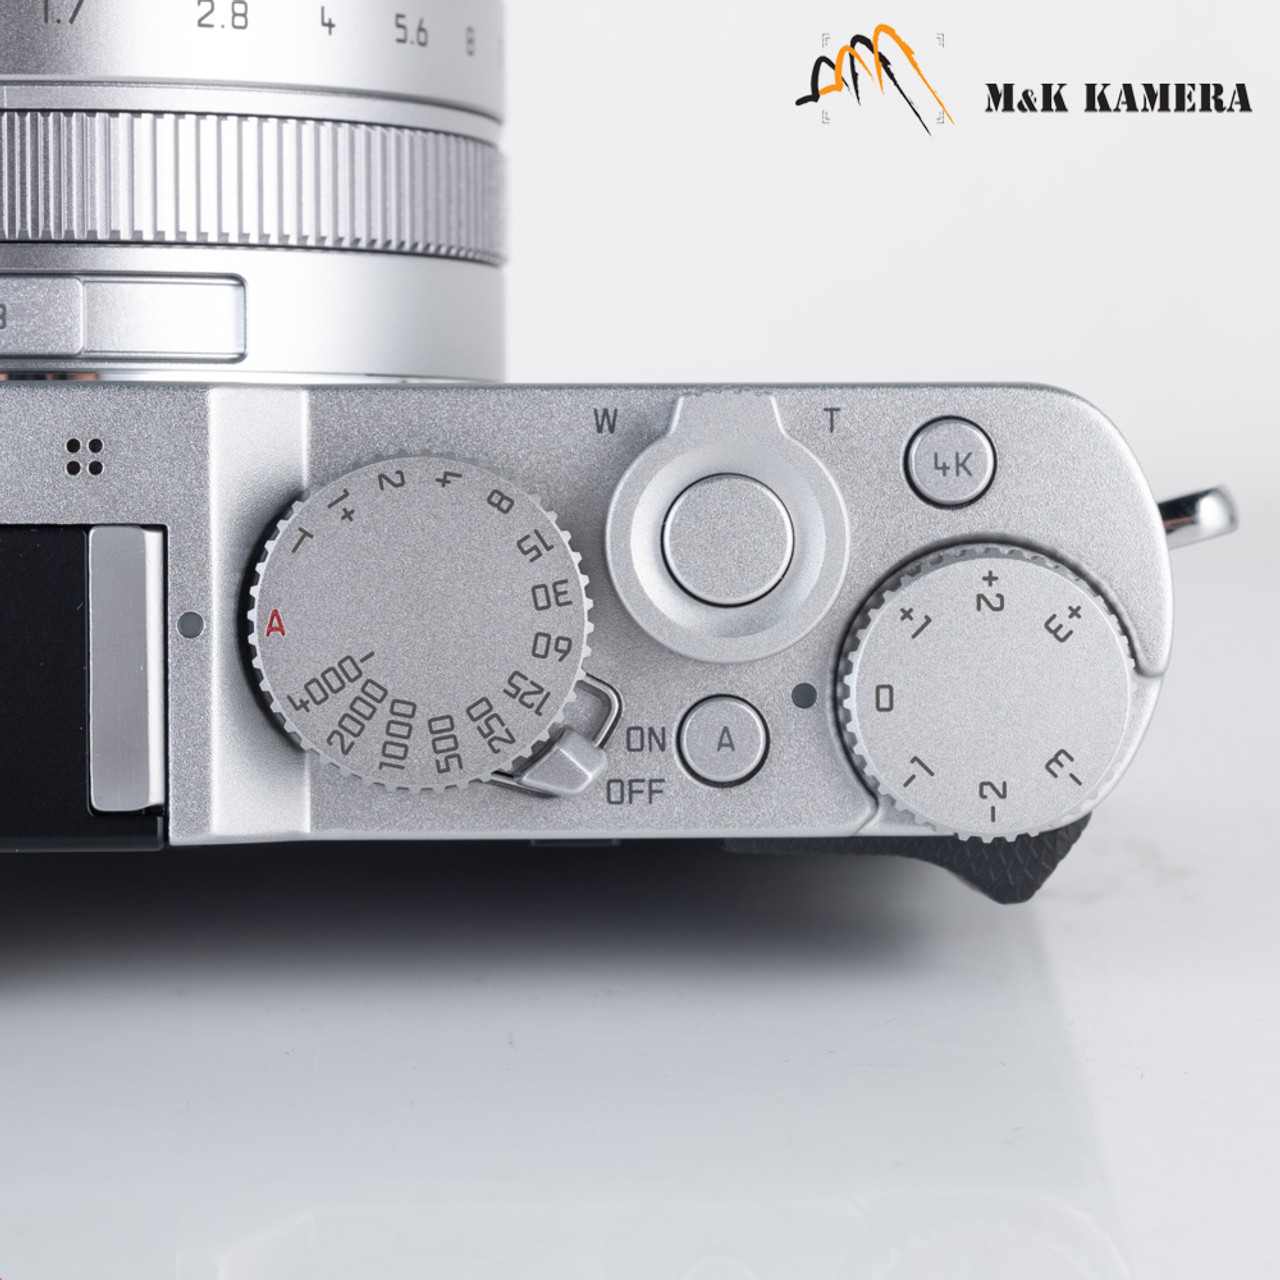 Leica D-Lux 7 Digital Camera, Silver {17MP} (19116) at KEH Camera